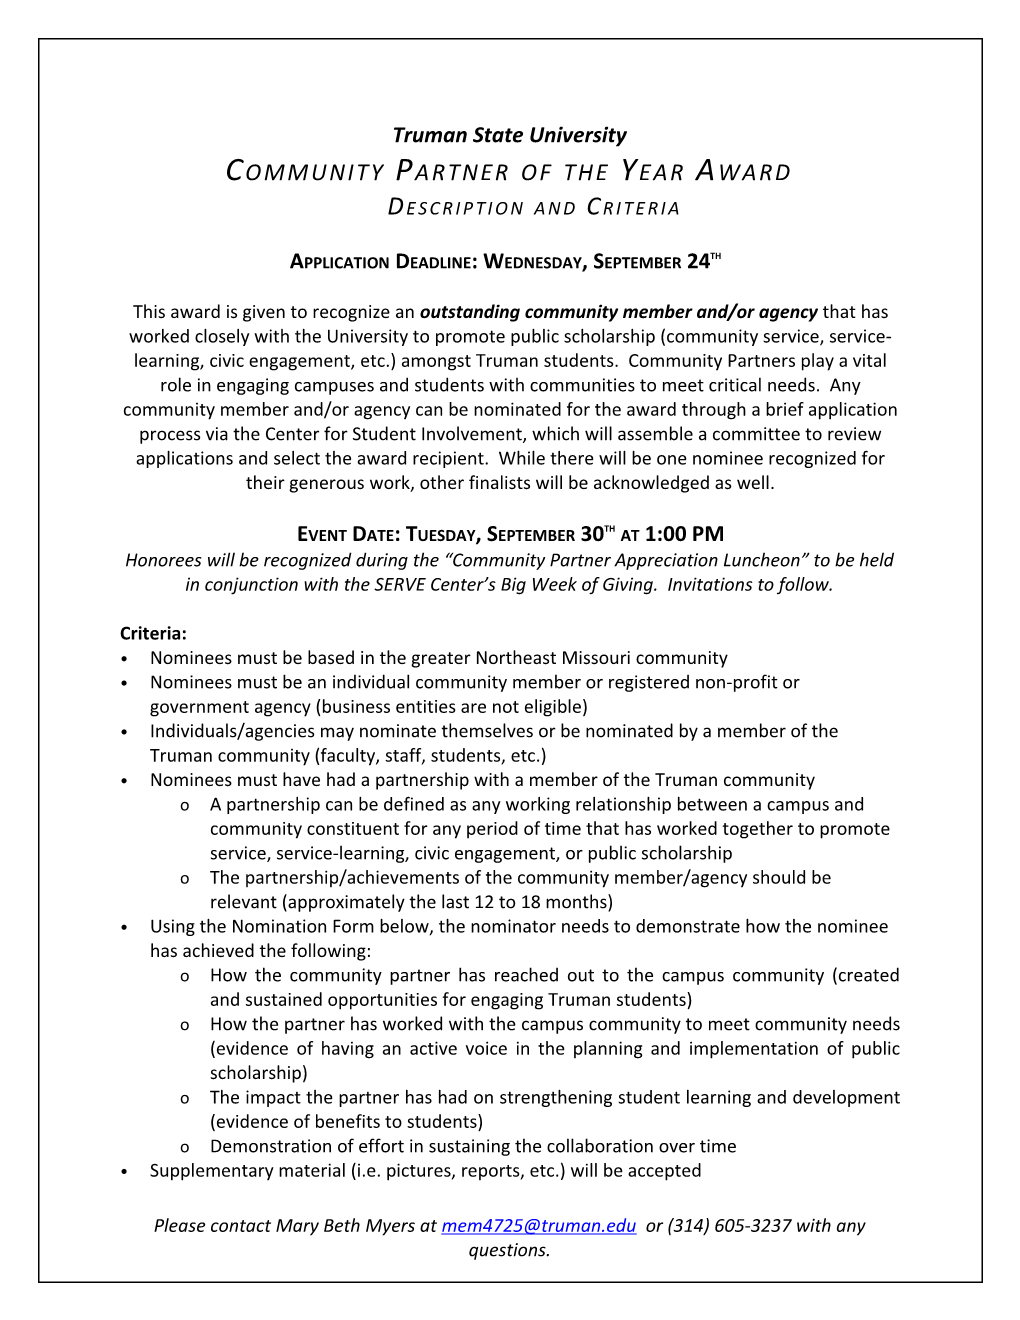 Campus/Community Partnership Award